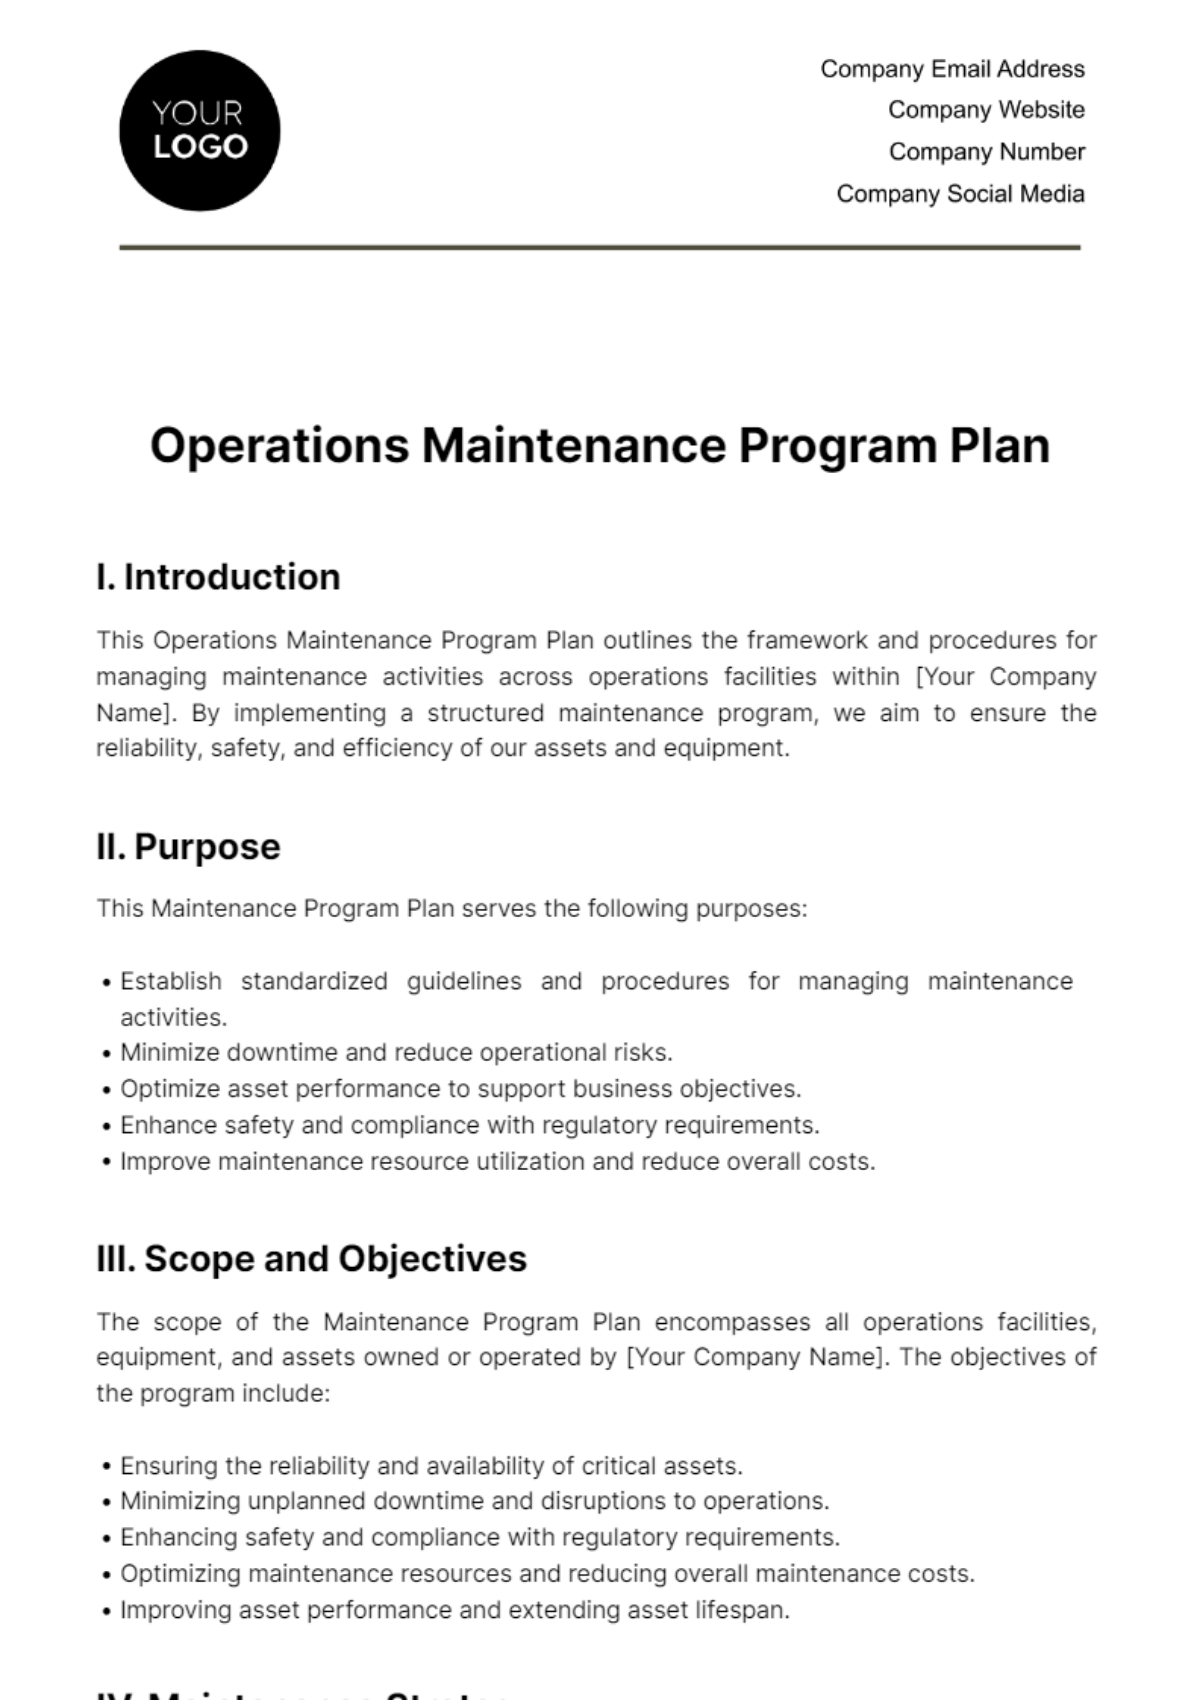 Operations Maintenance Program Plan Template